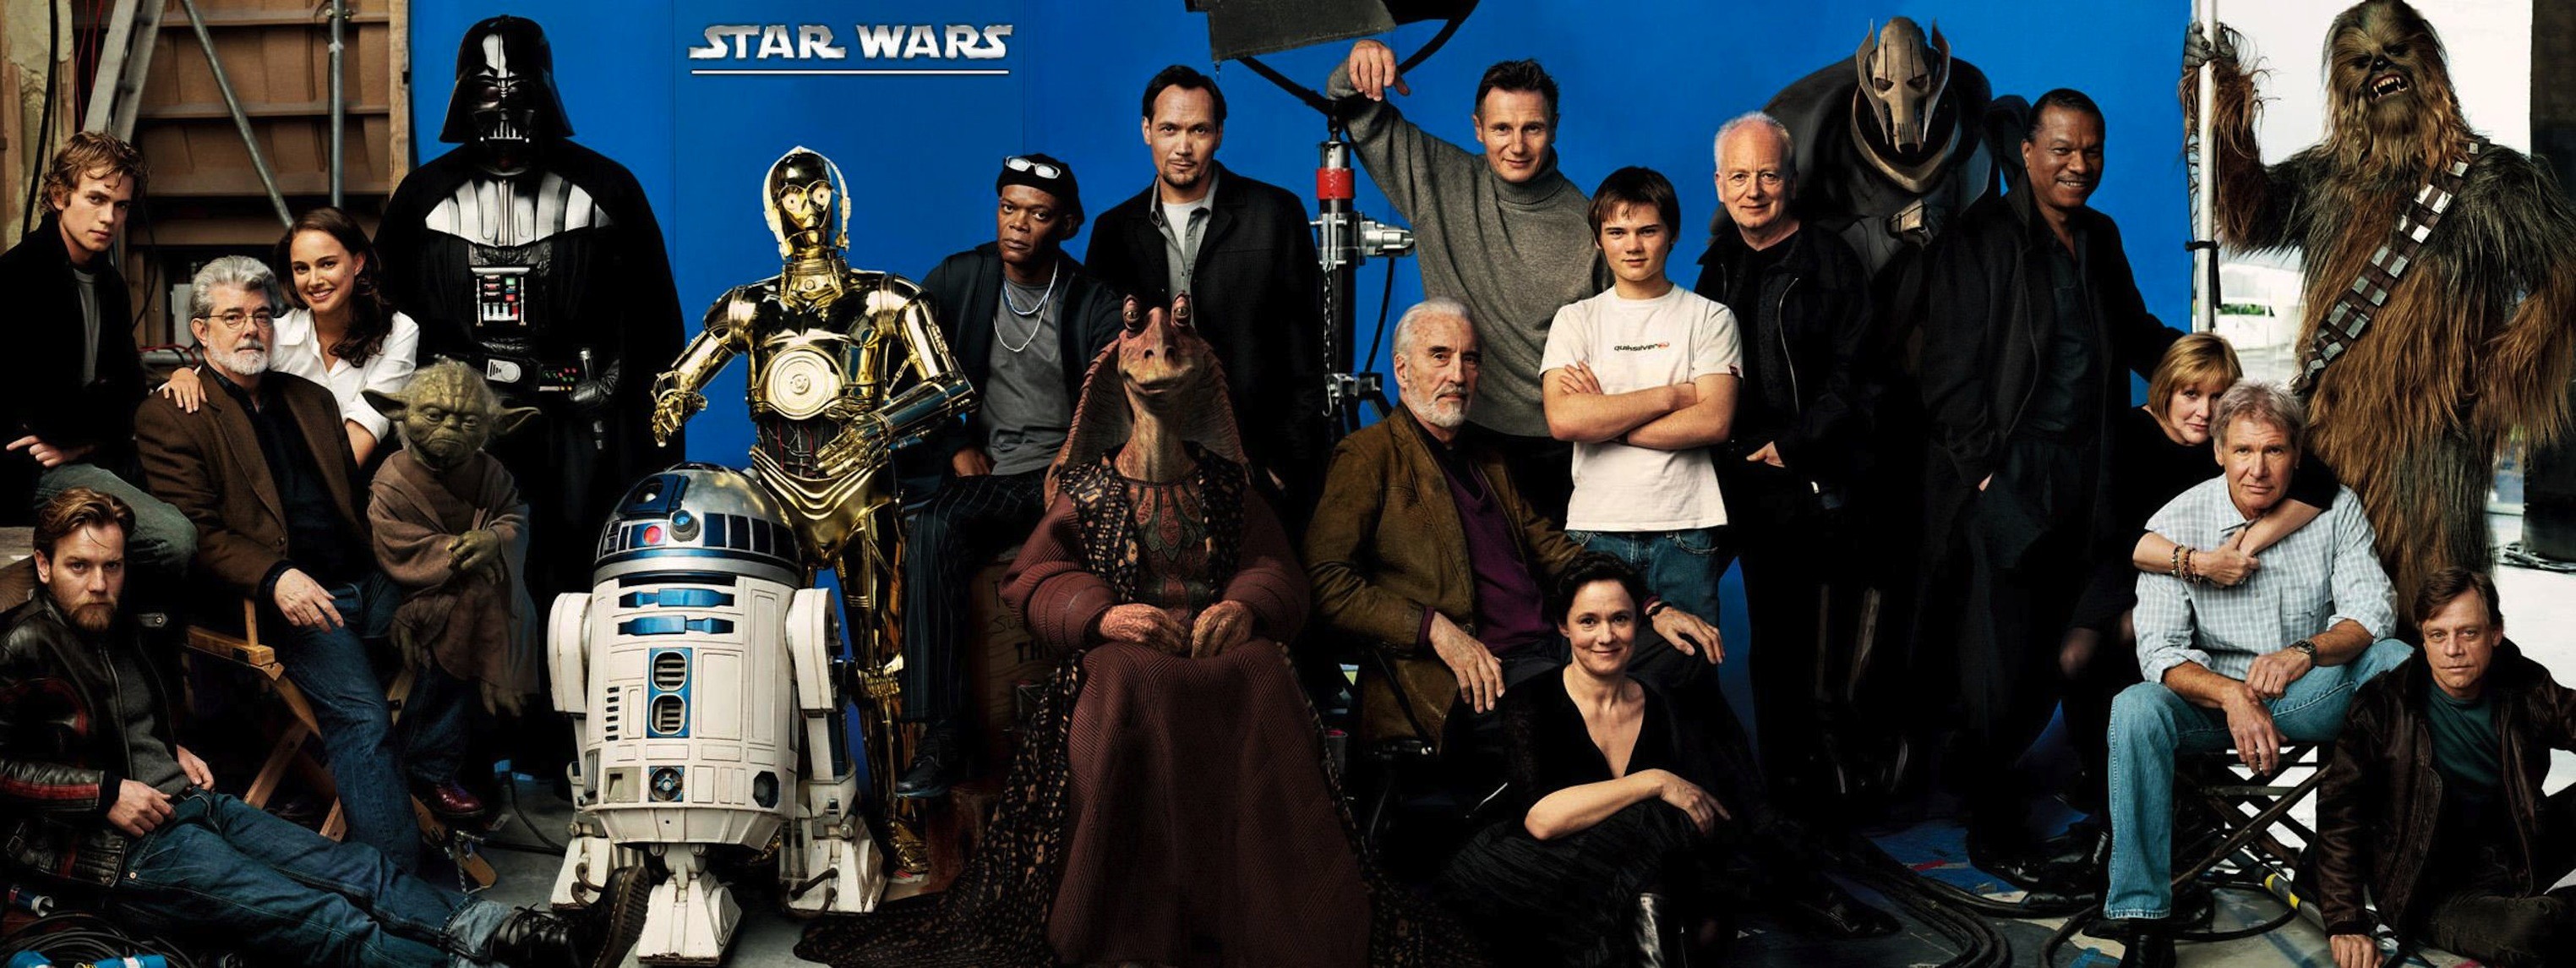 3048x1145 Movie - Star Wars George Lucas C-3PO Jar Jar Binks Harrison Ford R2-